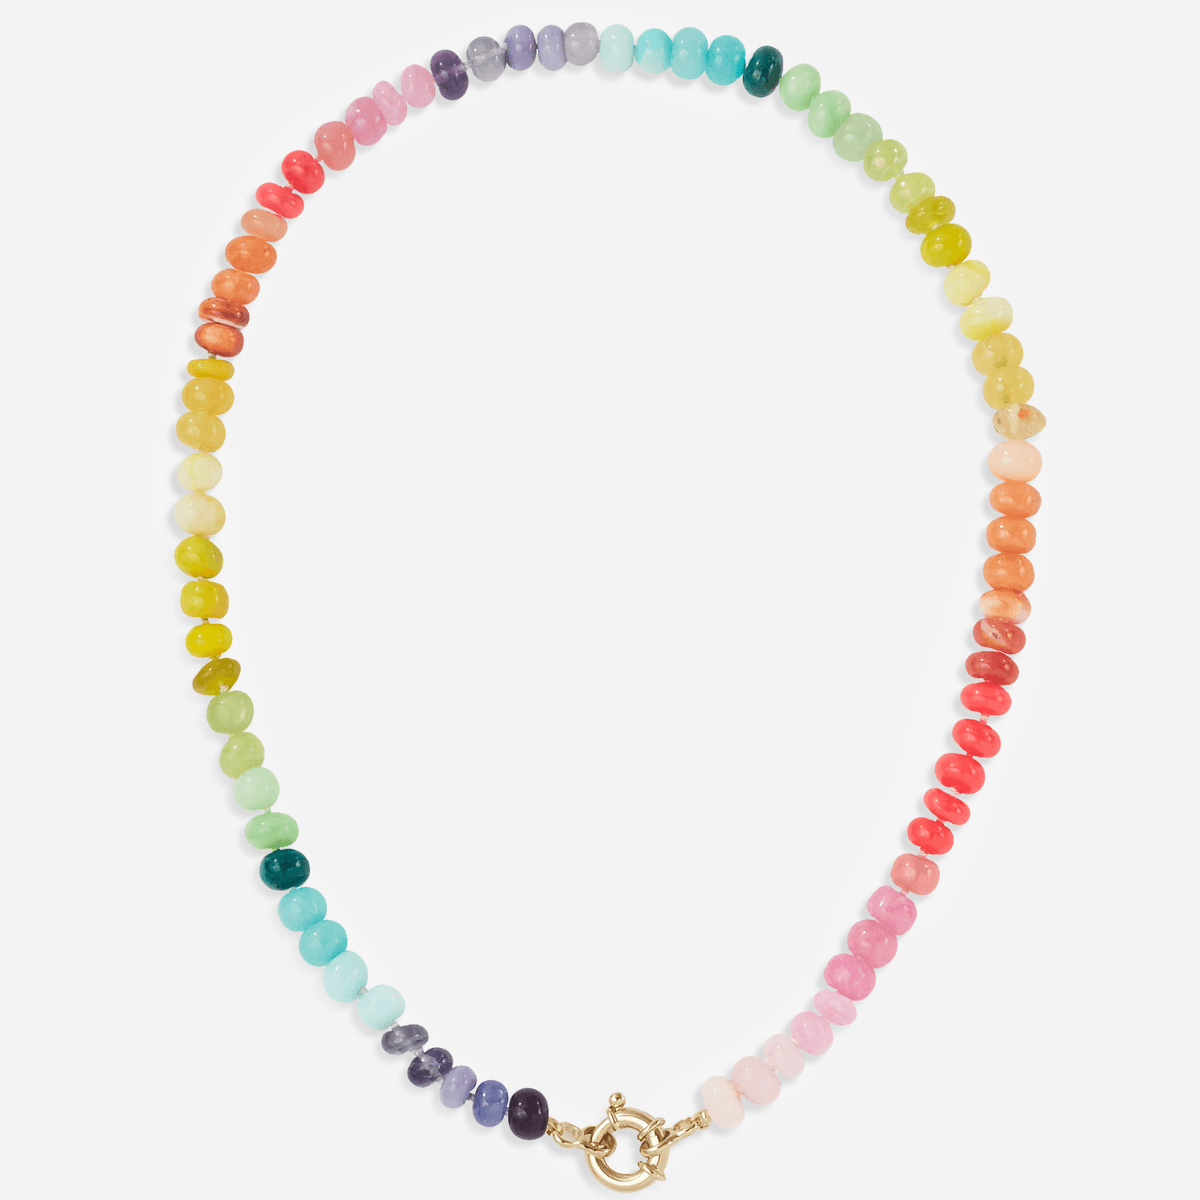 Neon Rainbow Gemstone Necklace - Encirkled Jewelry - At Present